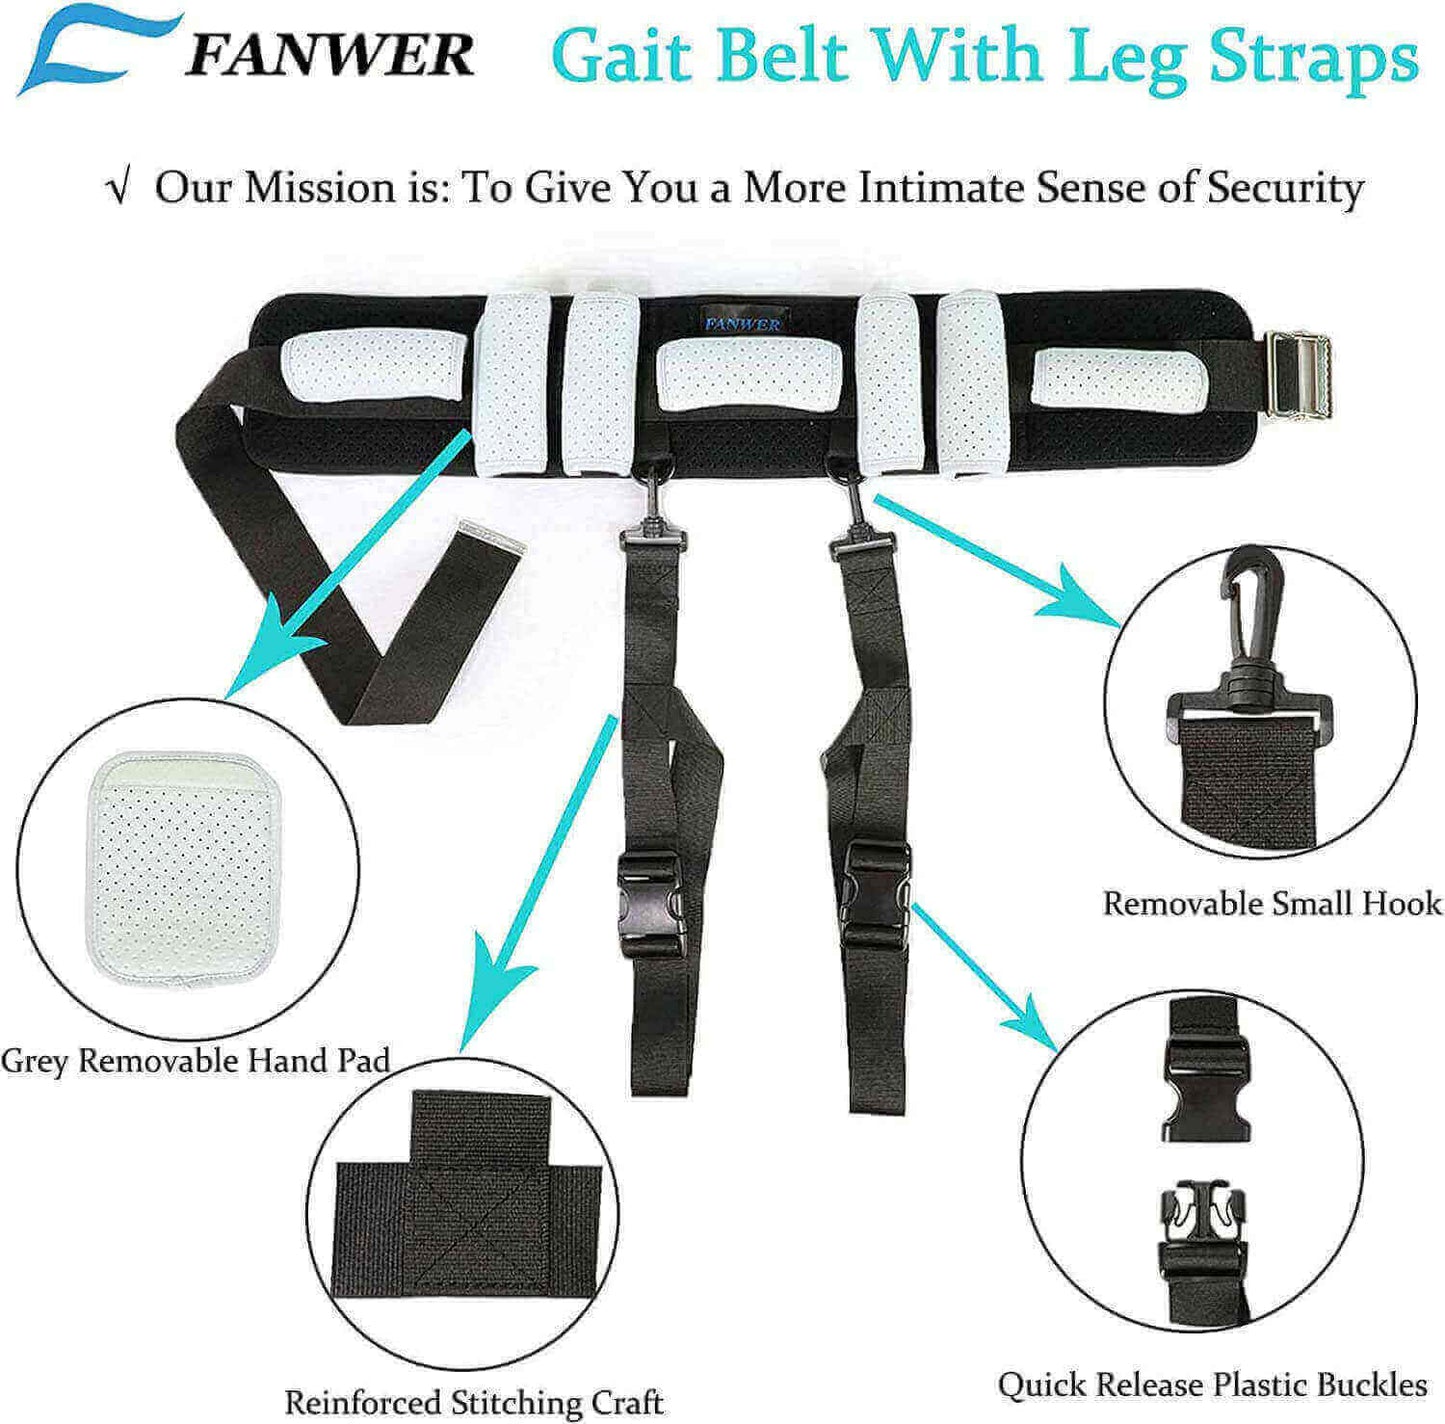 Fanwer transfer gait belt with handles & leg straps for transfer aids, detailed parts breakdown